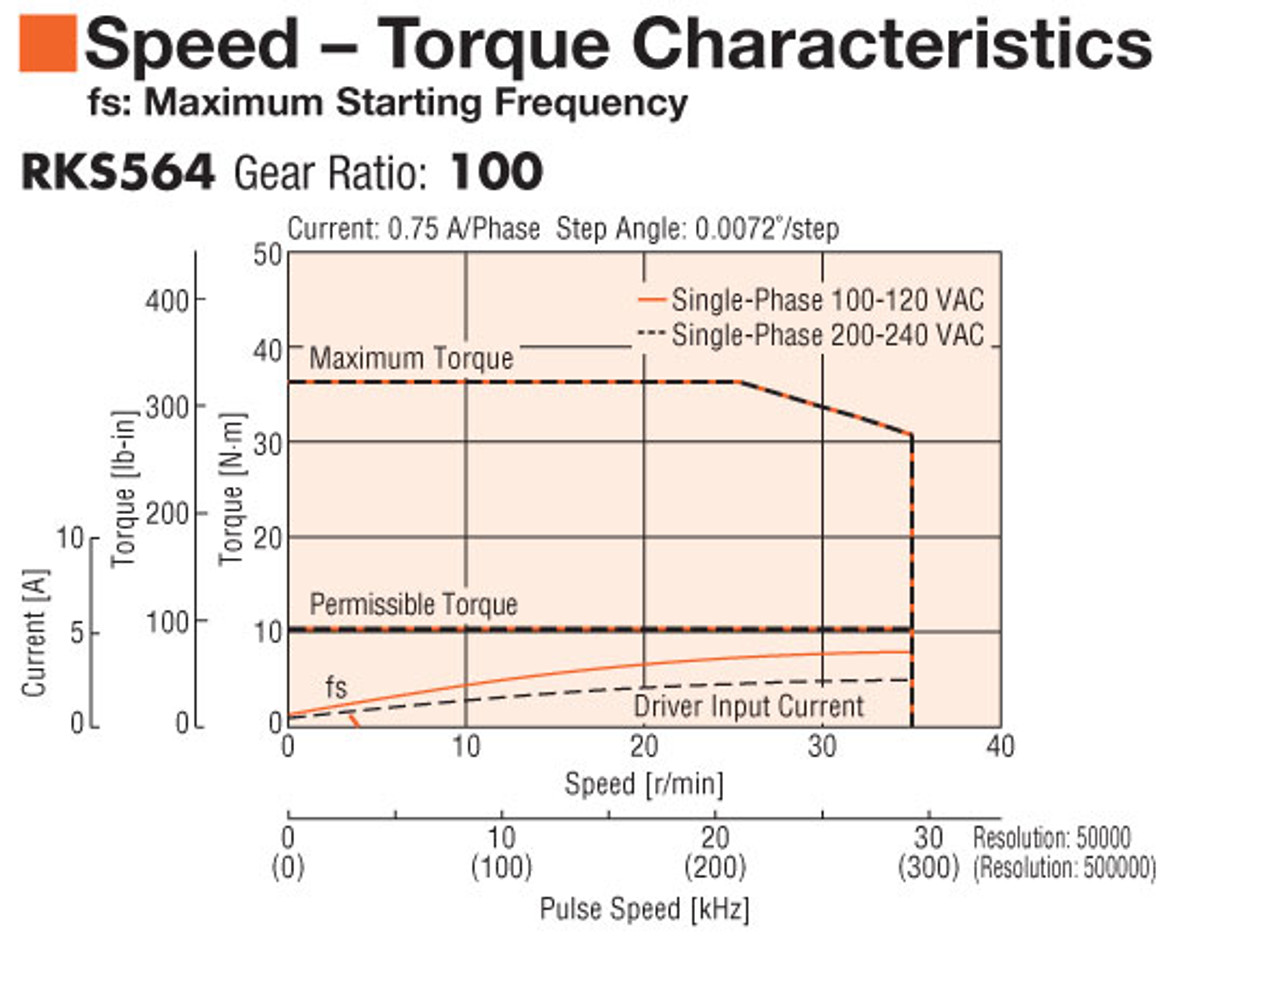 PKE564AC-HS100 - Speed-Torque